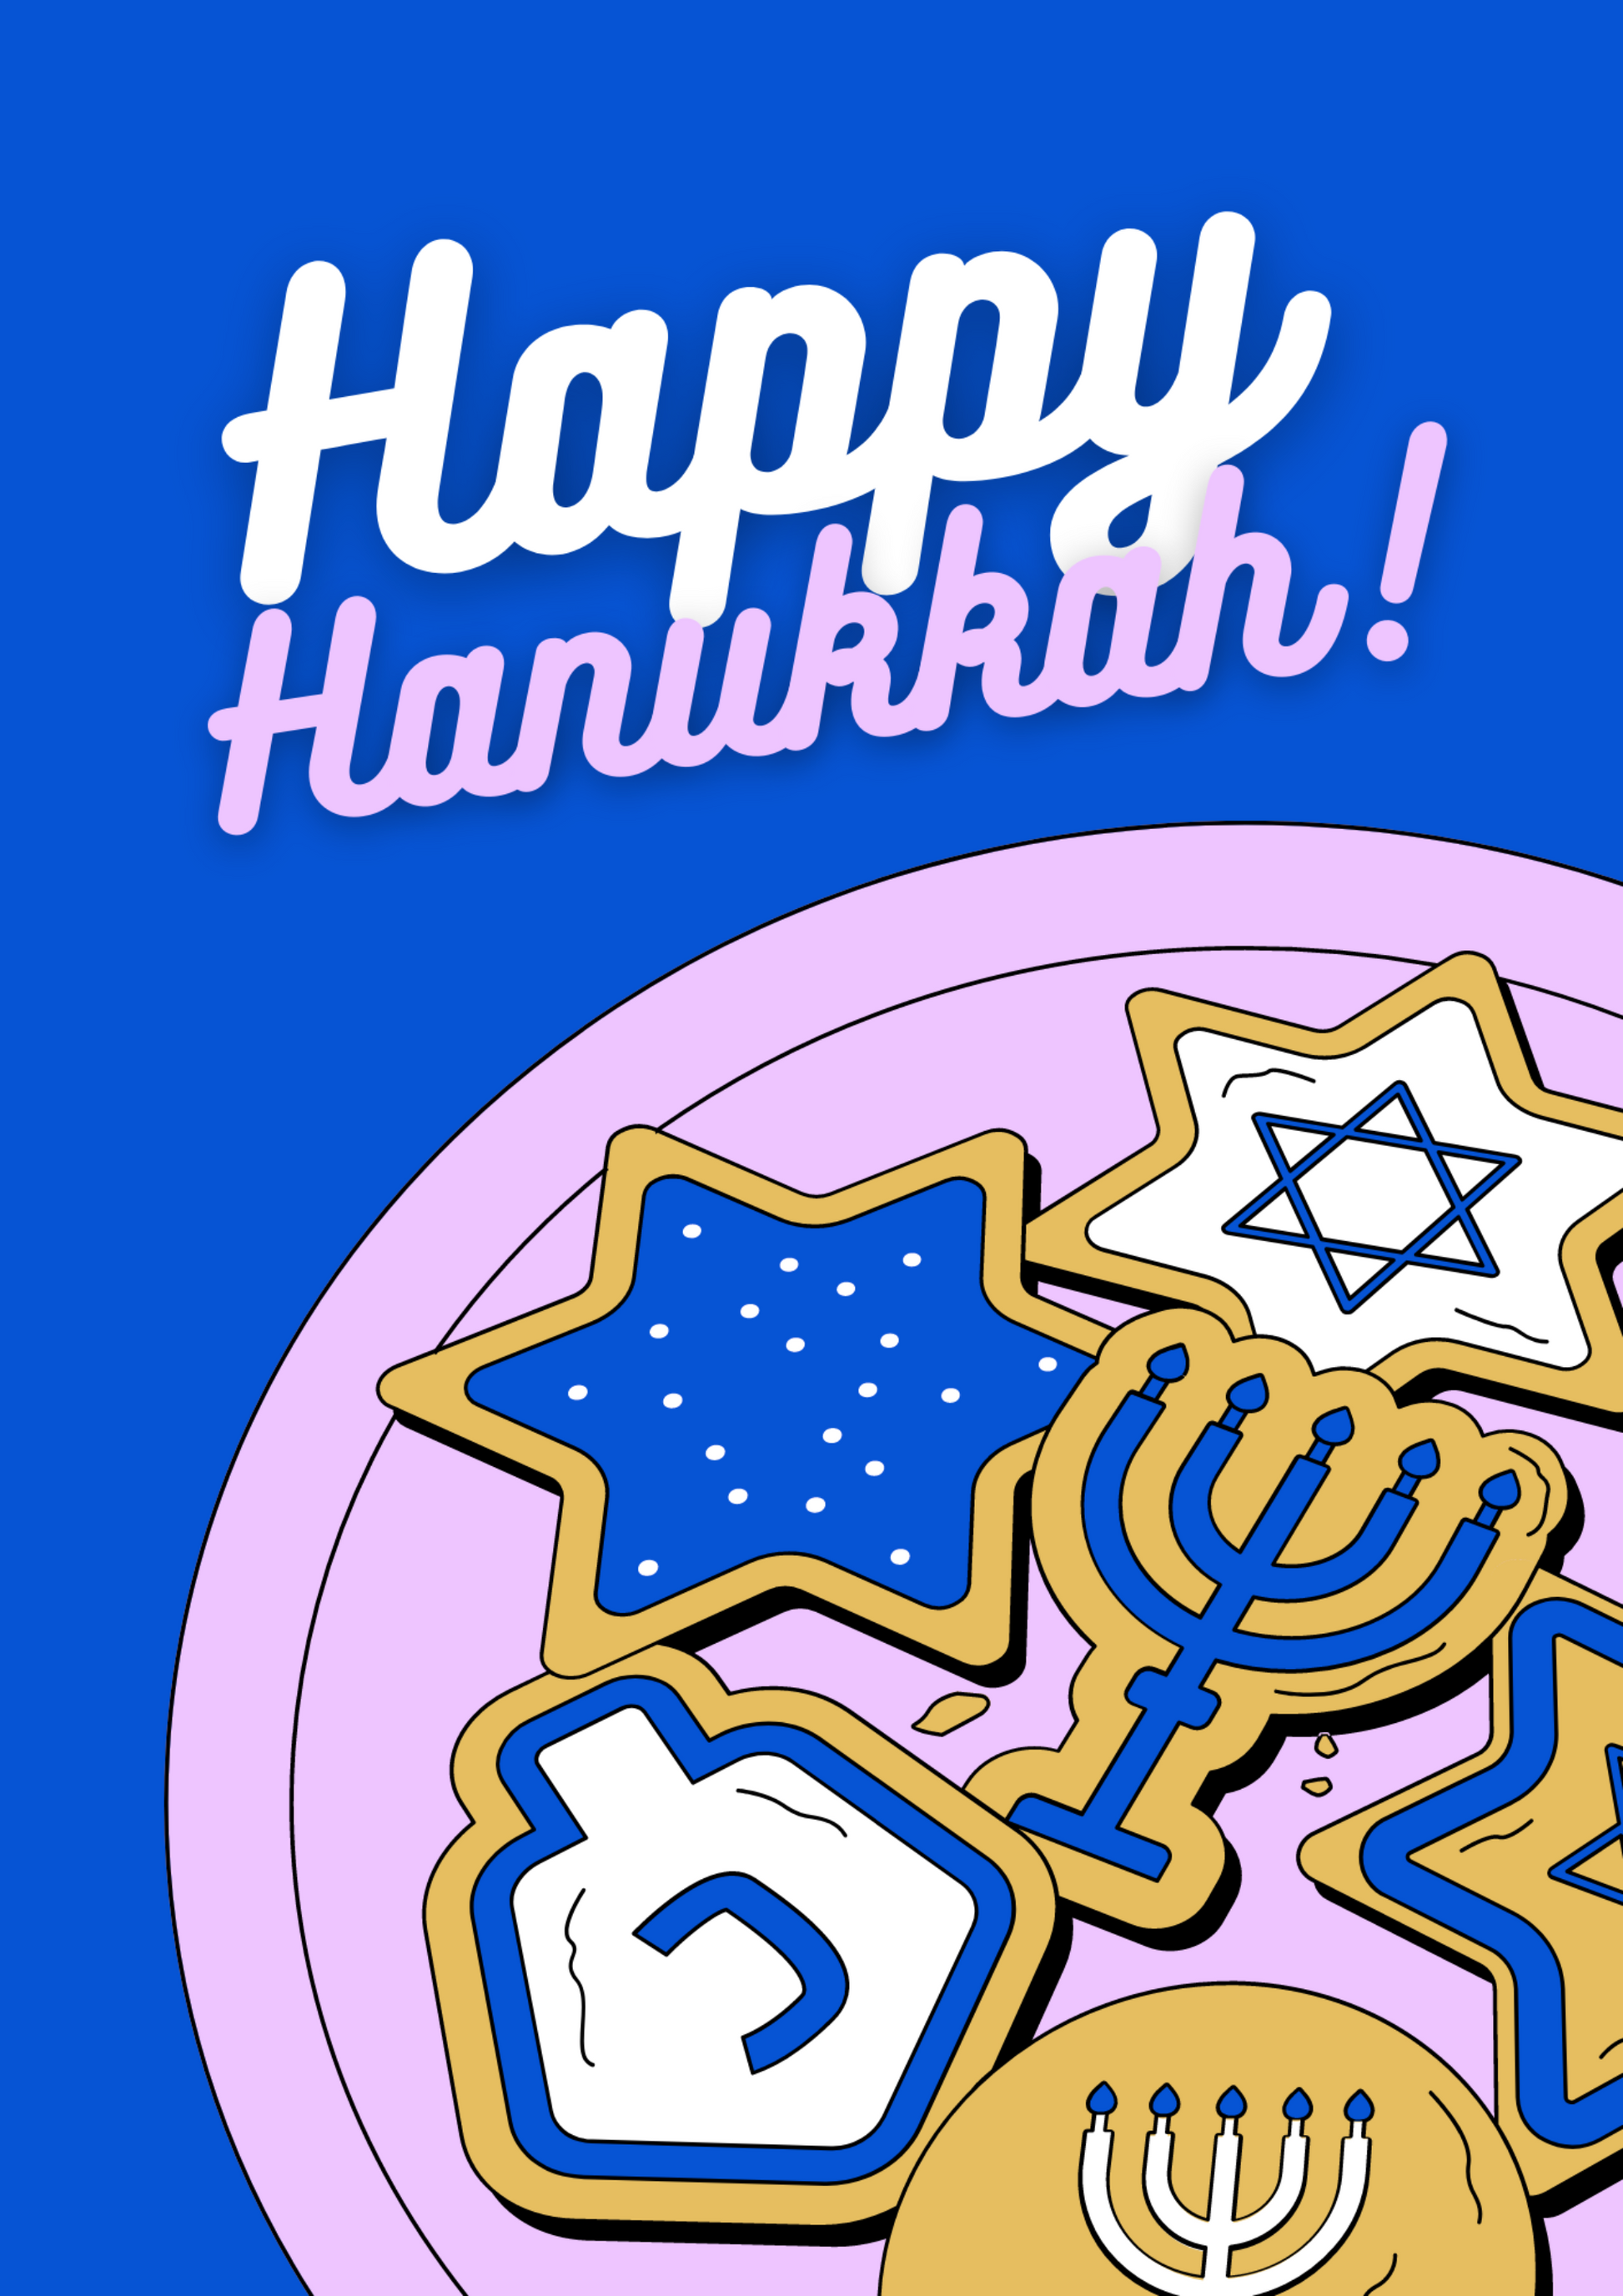 Happy Hanukkah Cookies Holiday Card.